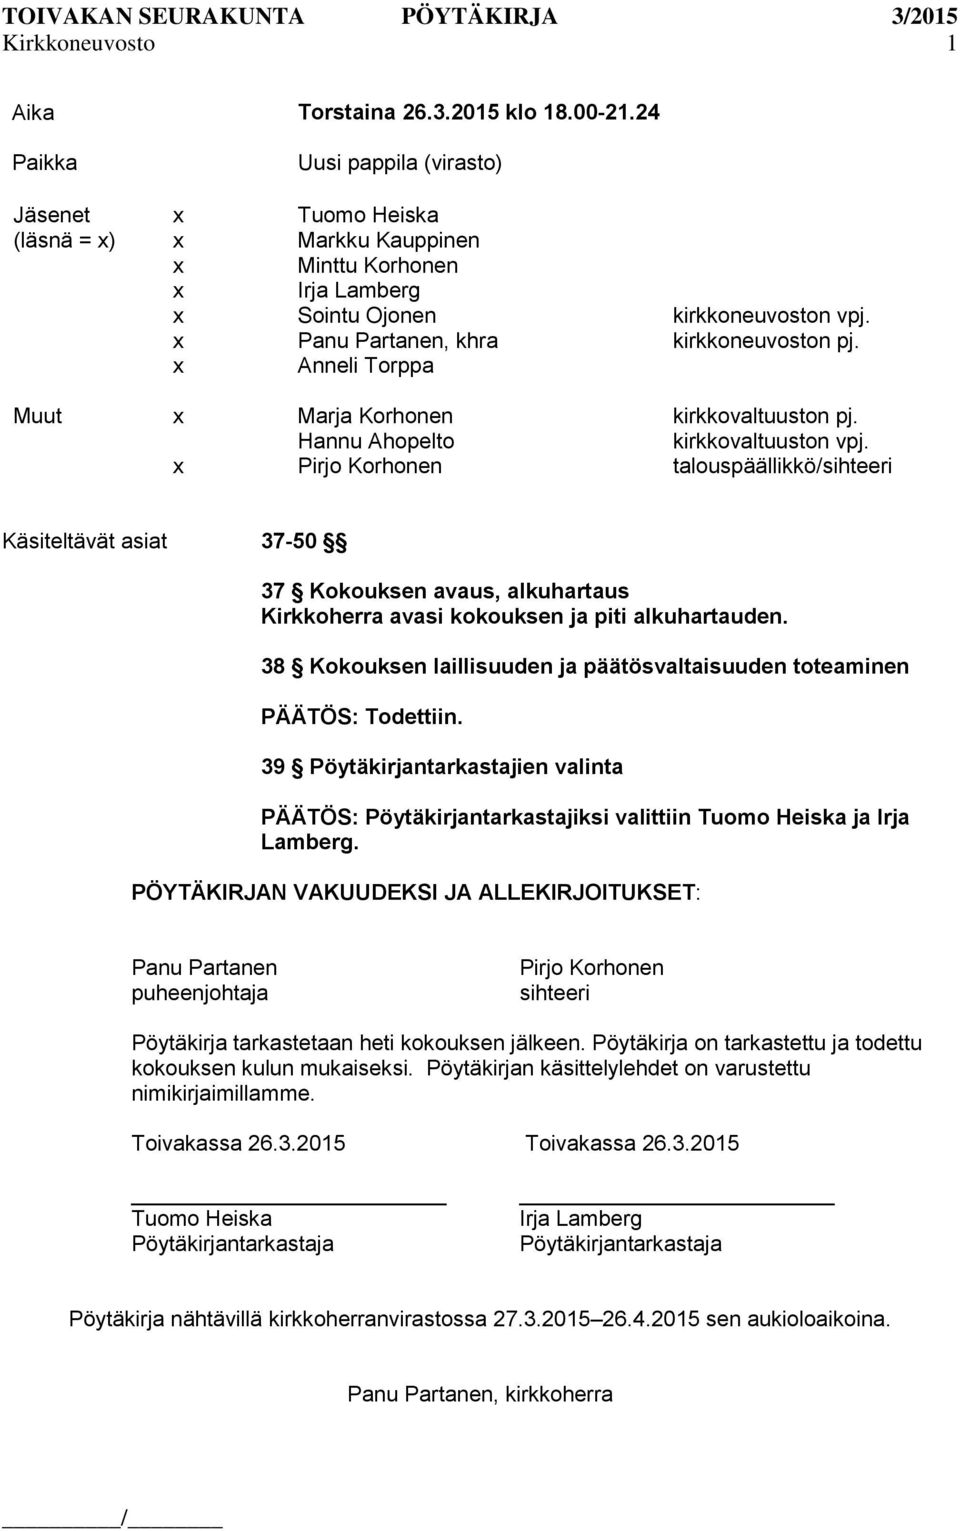 Muut Marja Korhonen kirkkovaltuuston pj. Hannu Ahopelto kirkkovaltuuston vpj.